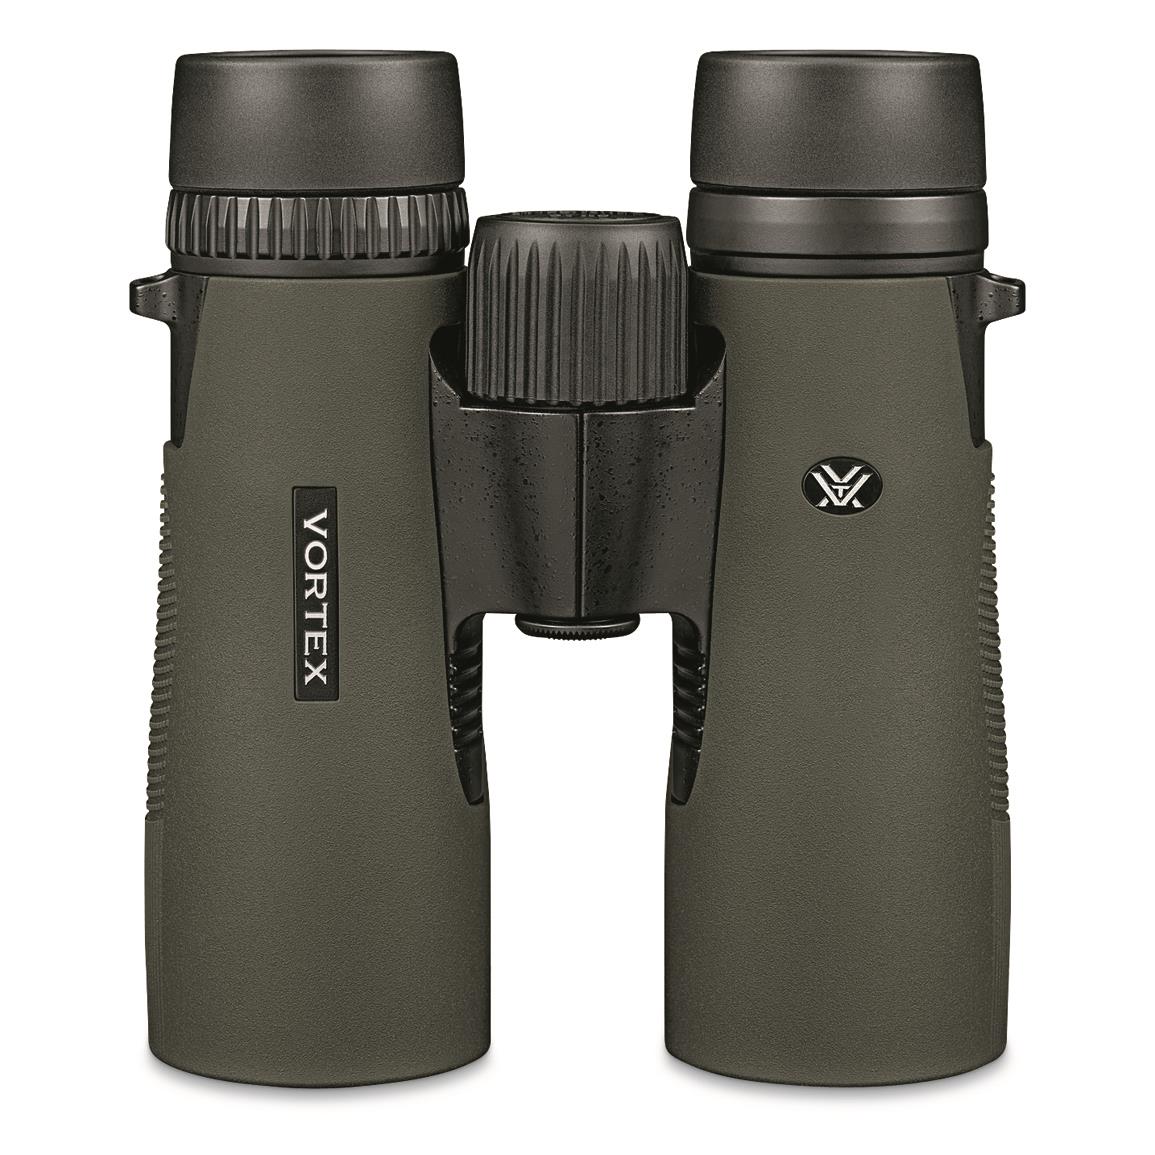 Vortex Diamondback HD 8x42mm Binoculars